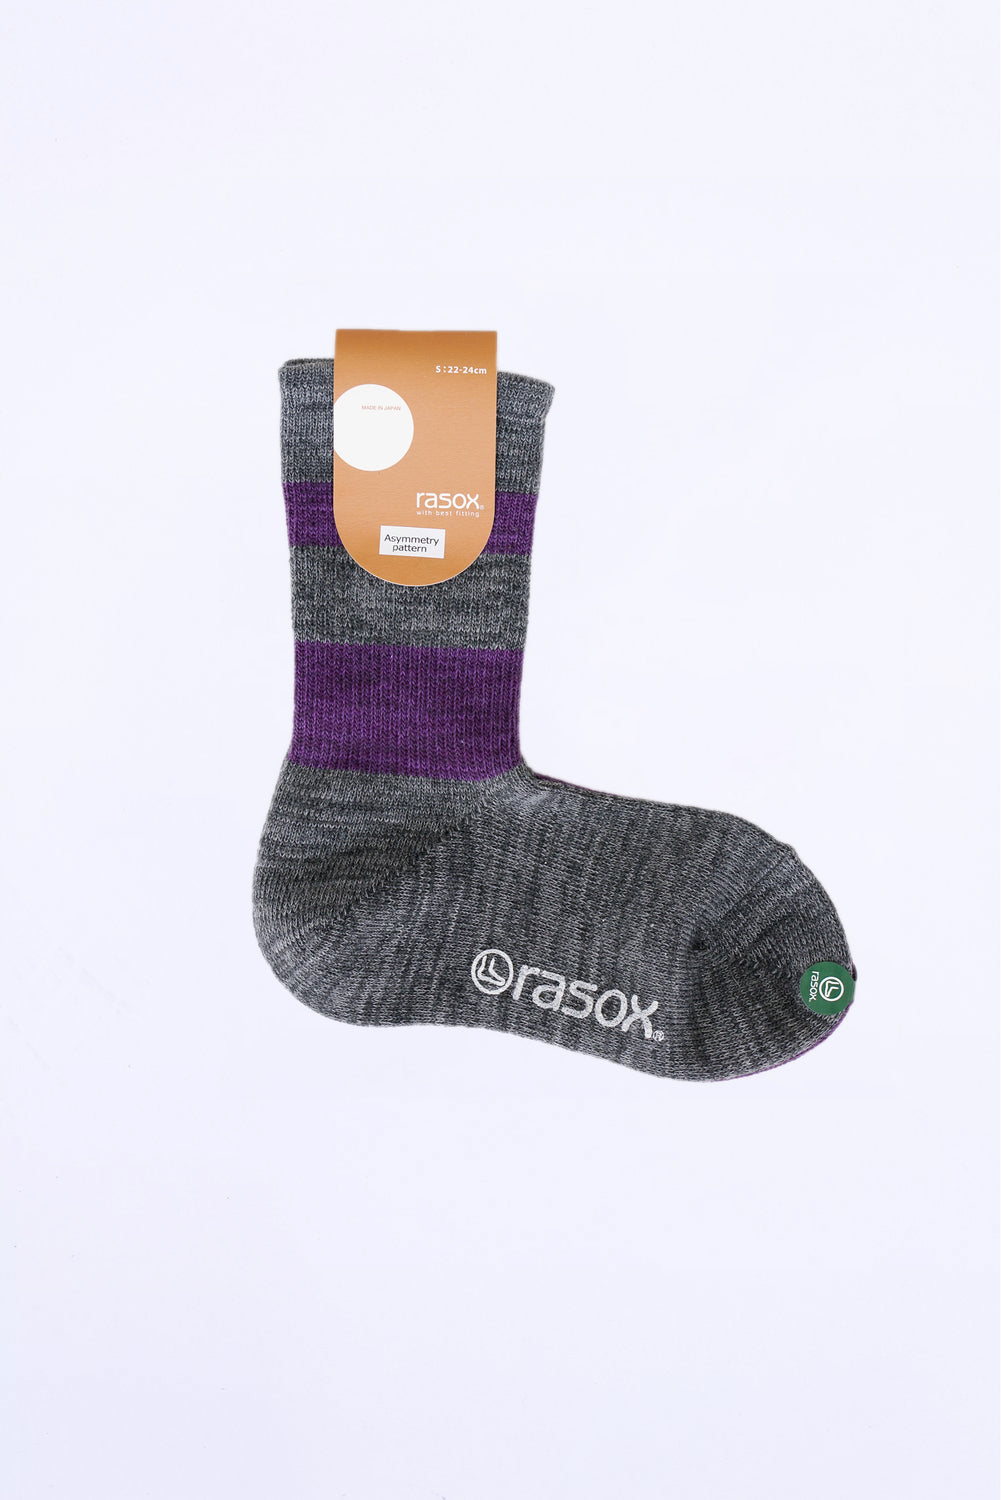 Asymmetry Socks Charcoal and Purple